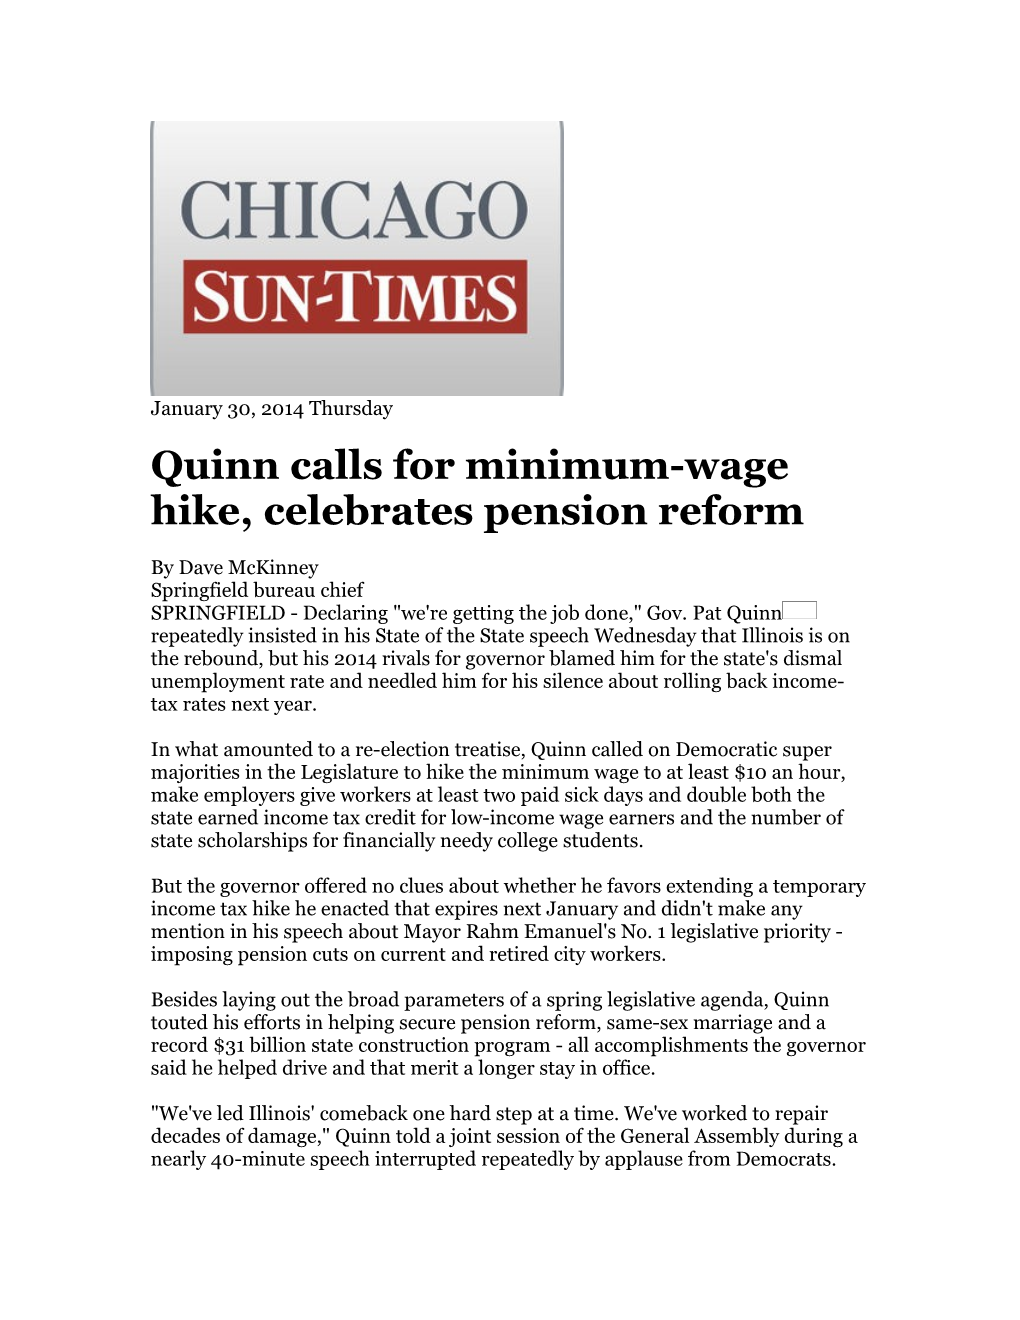 Quinn Calls for Minimum-Wage Hike, Celebrates Pension Reform